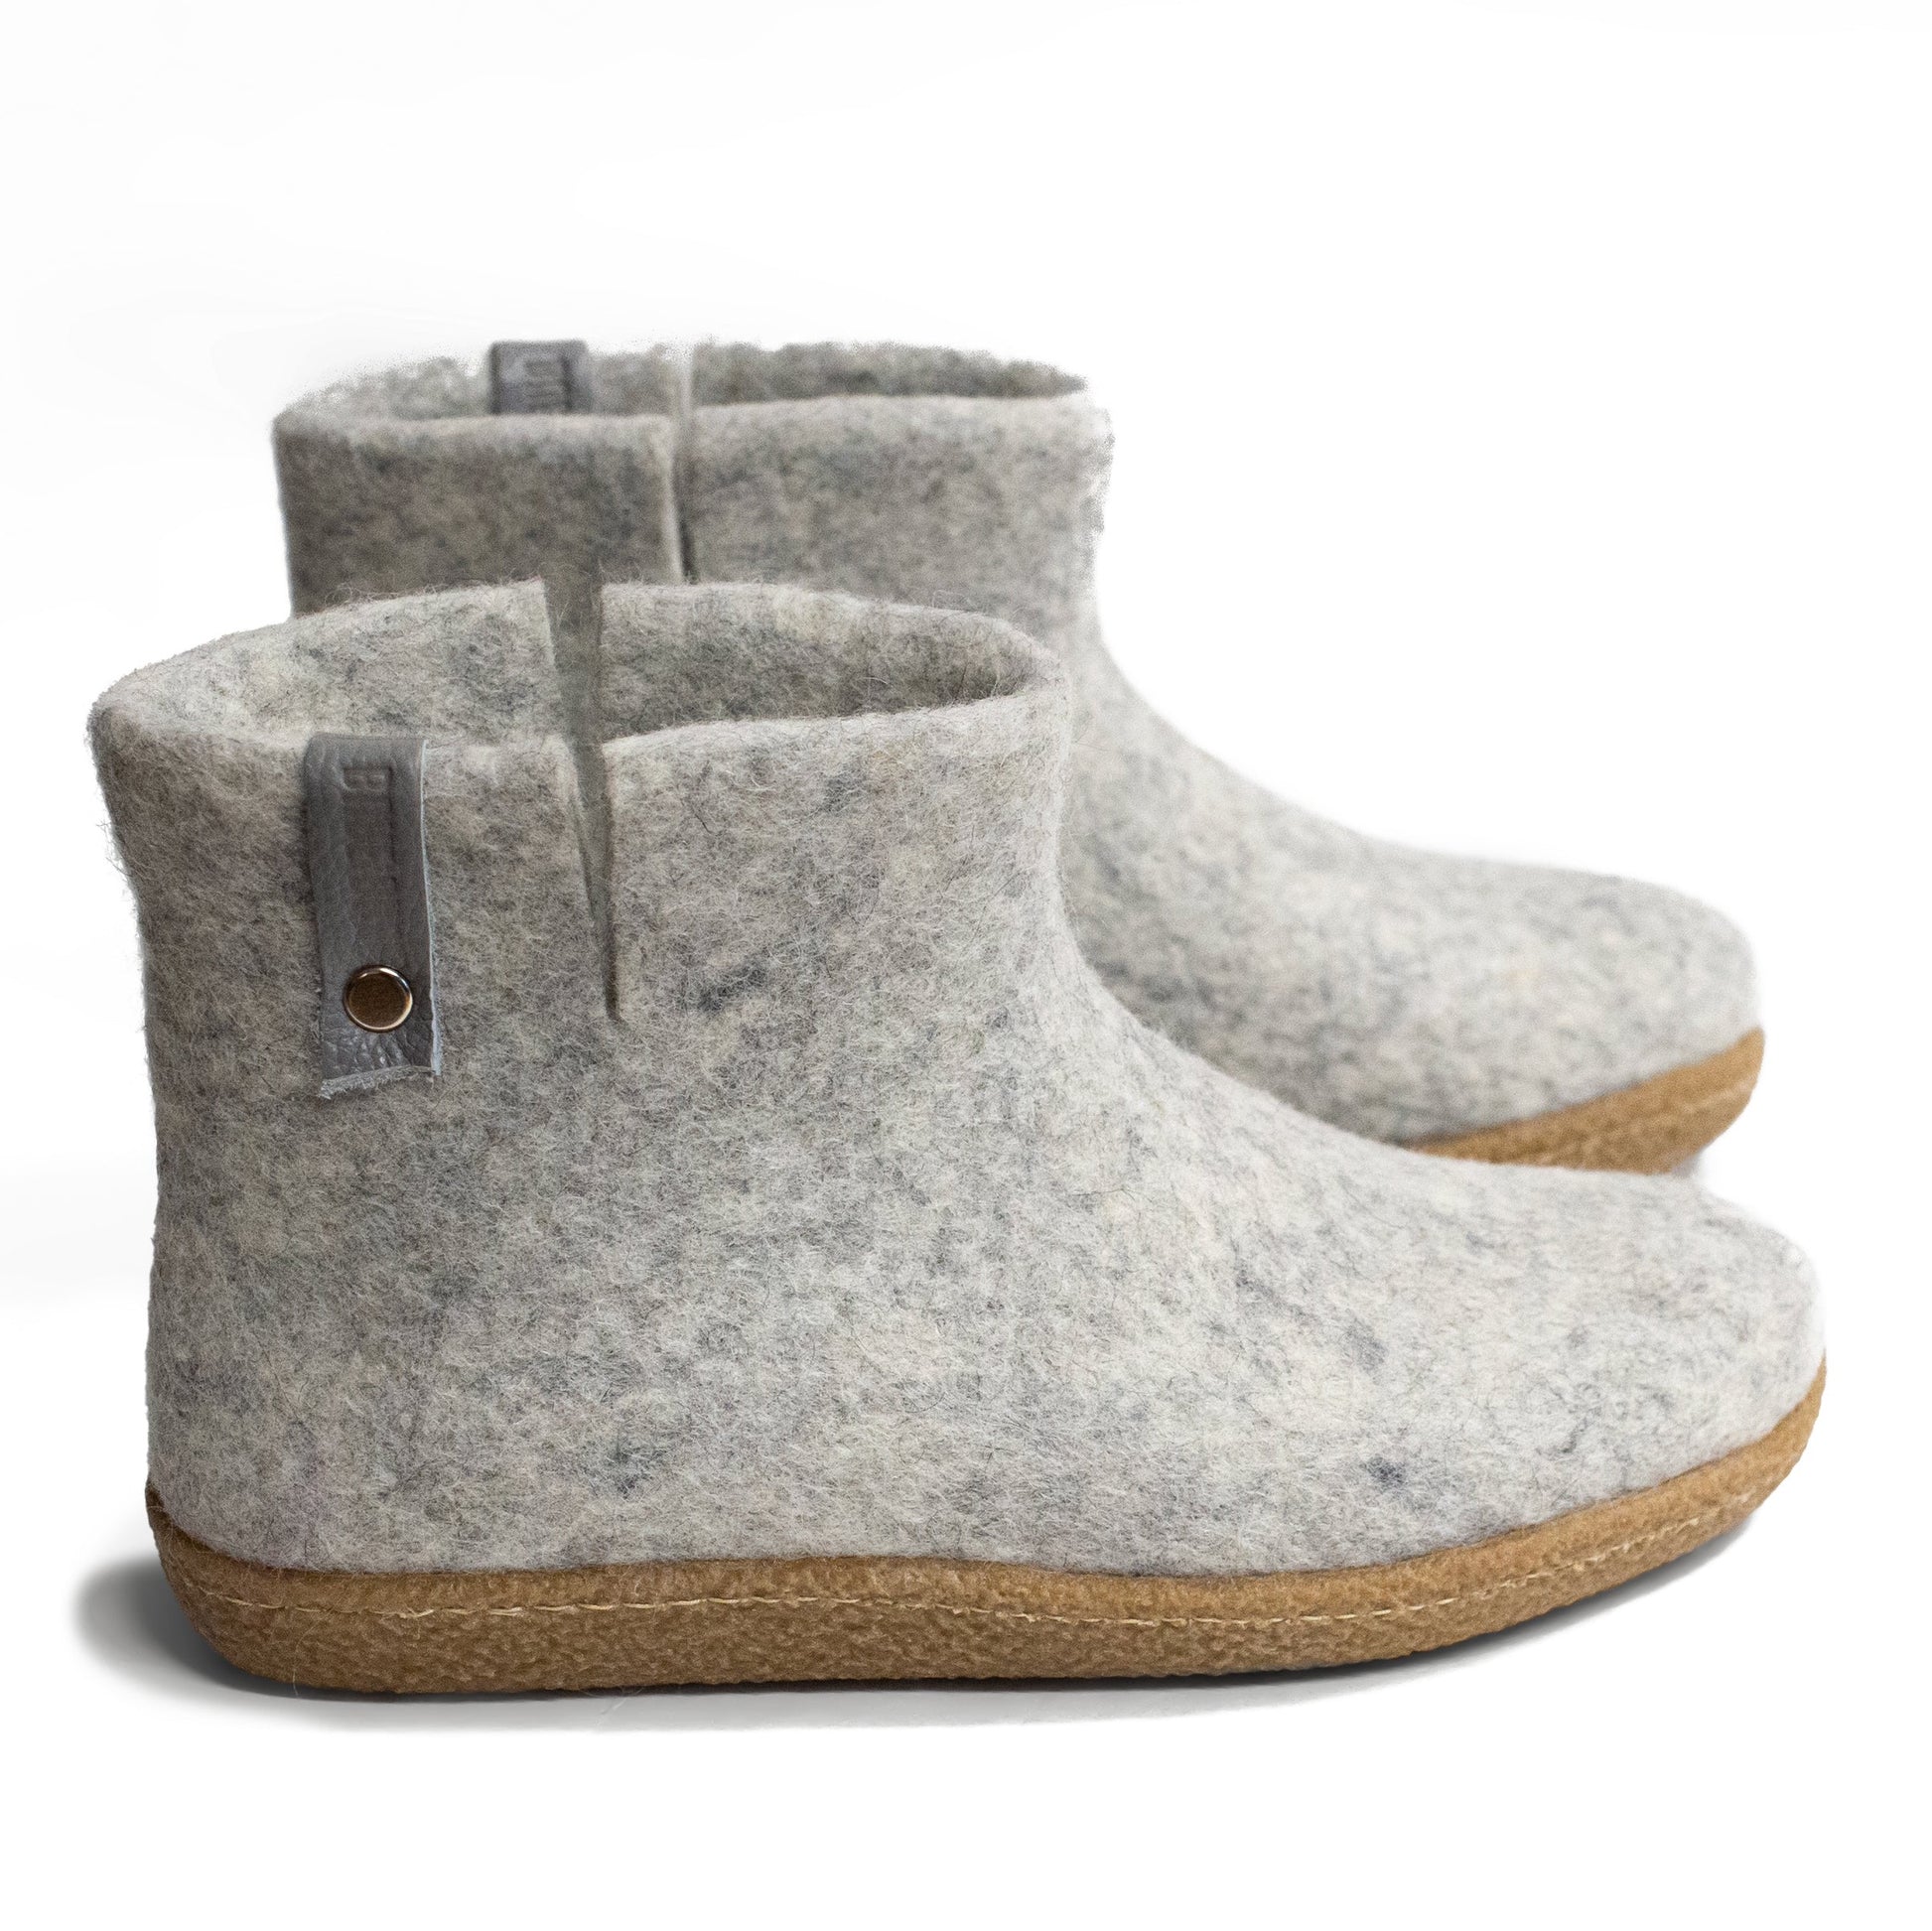 [felted_slippers],[wool_slippers], [burebure_slippers], [warm_wool_slippers], Women's WOOBOOTS - Light Gray, Bure Bure wool slippers